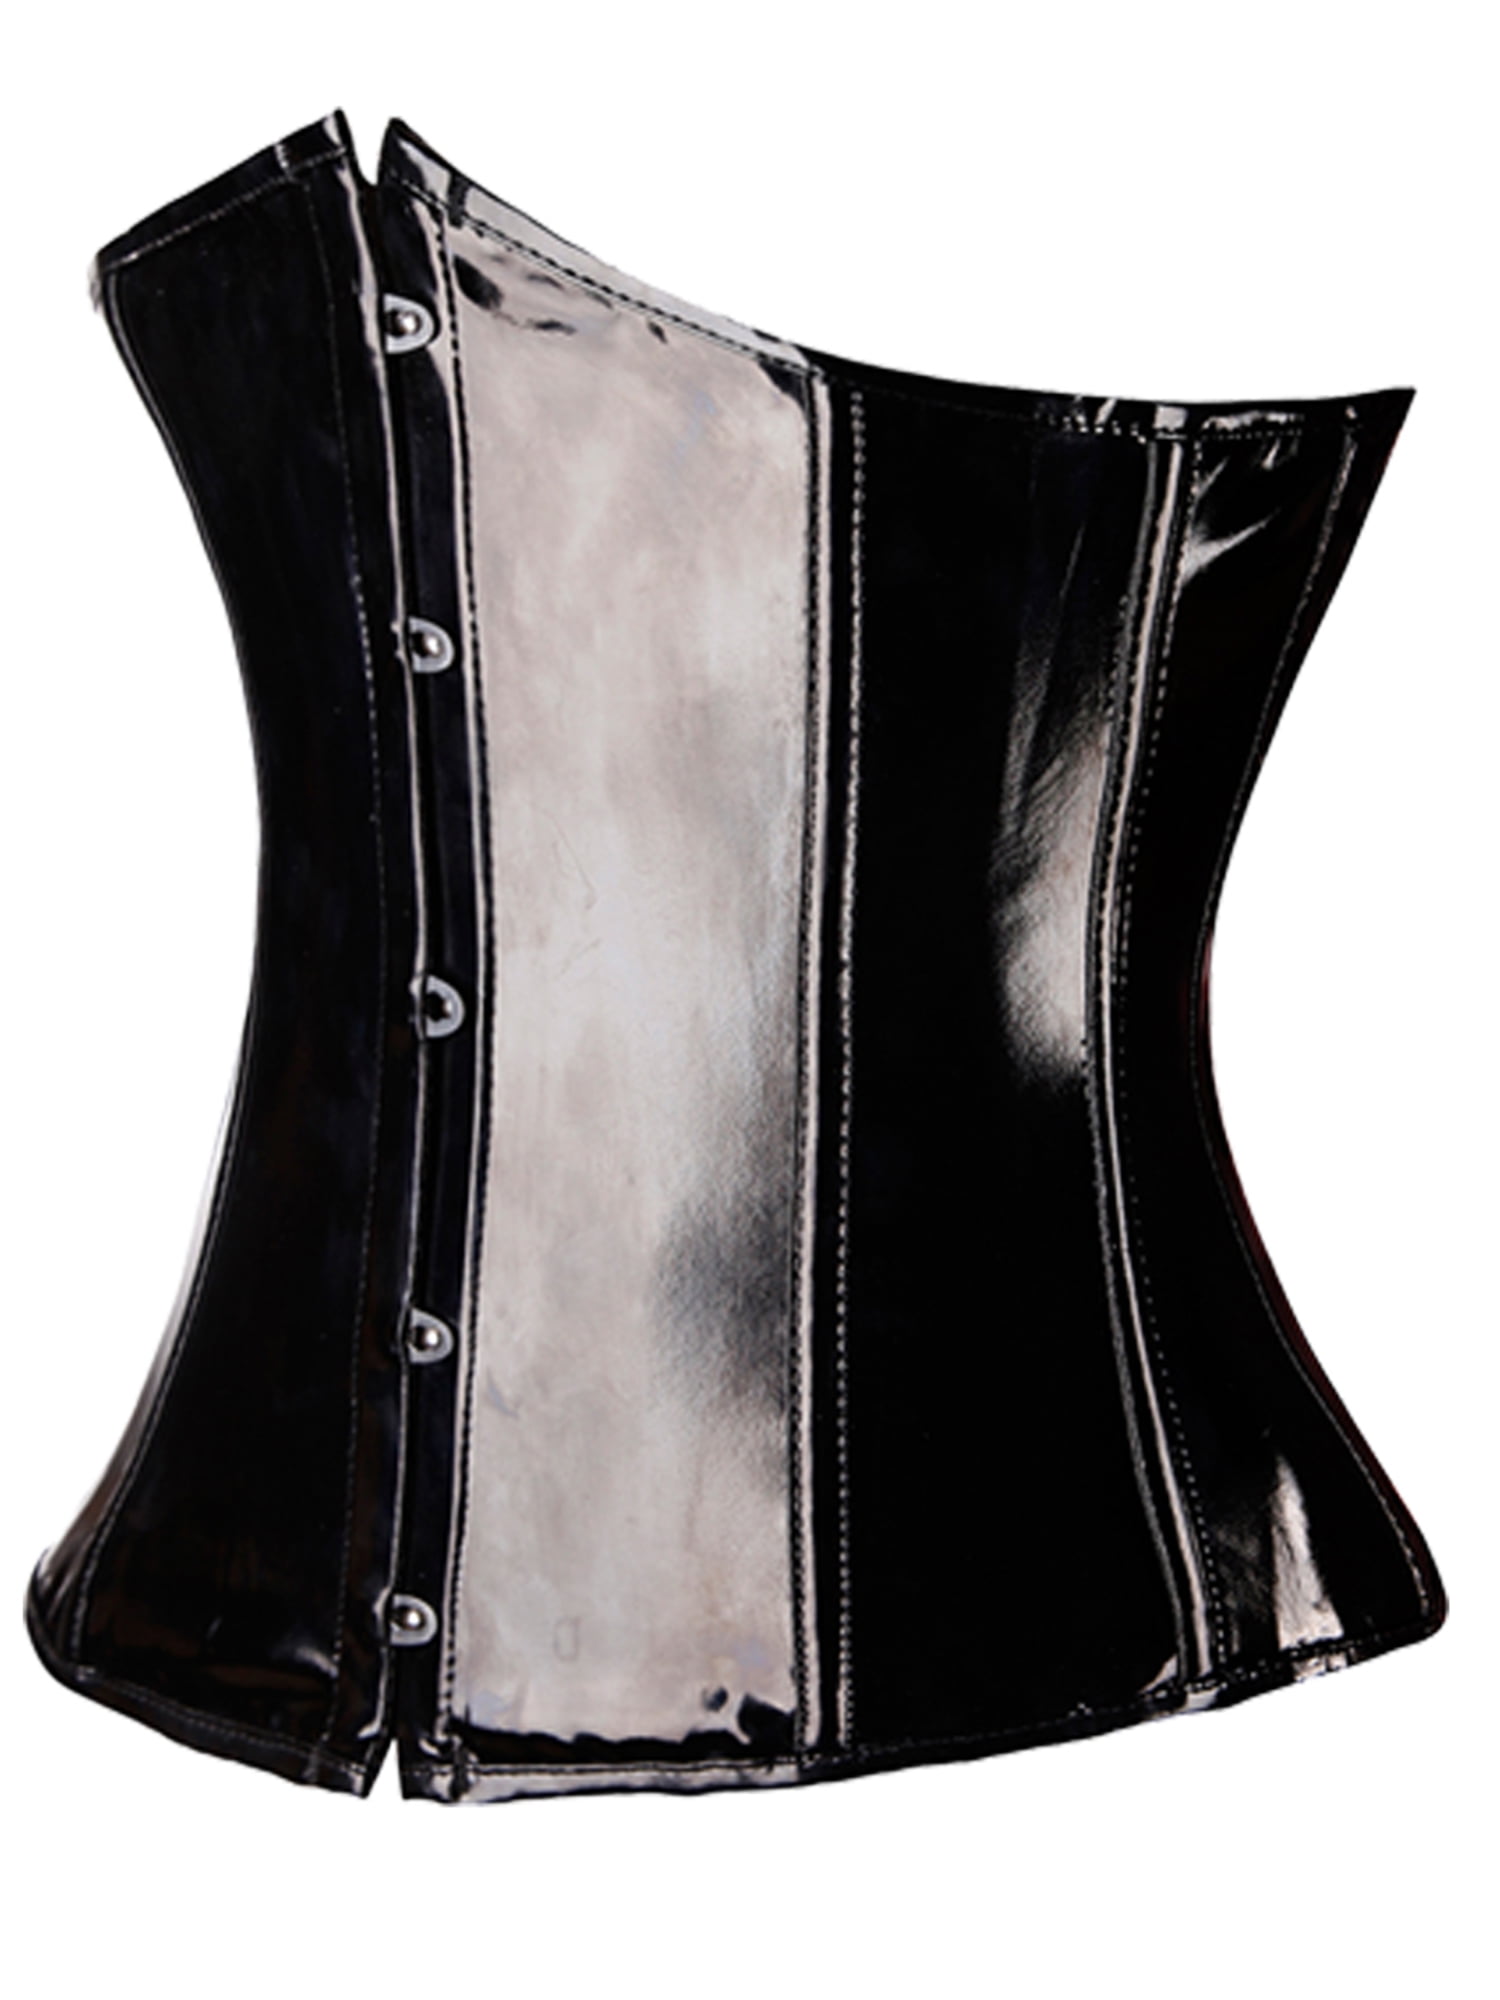 Black Shiny PVC Leather Steampunk Gothic Wasit Trainer Underbust